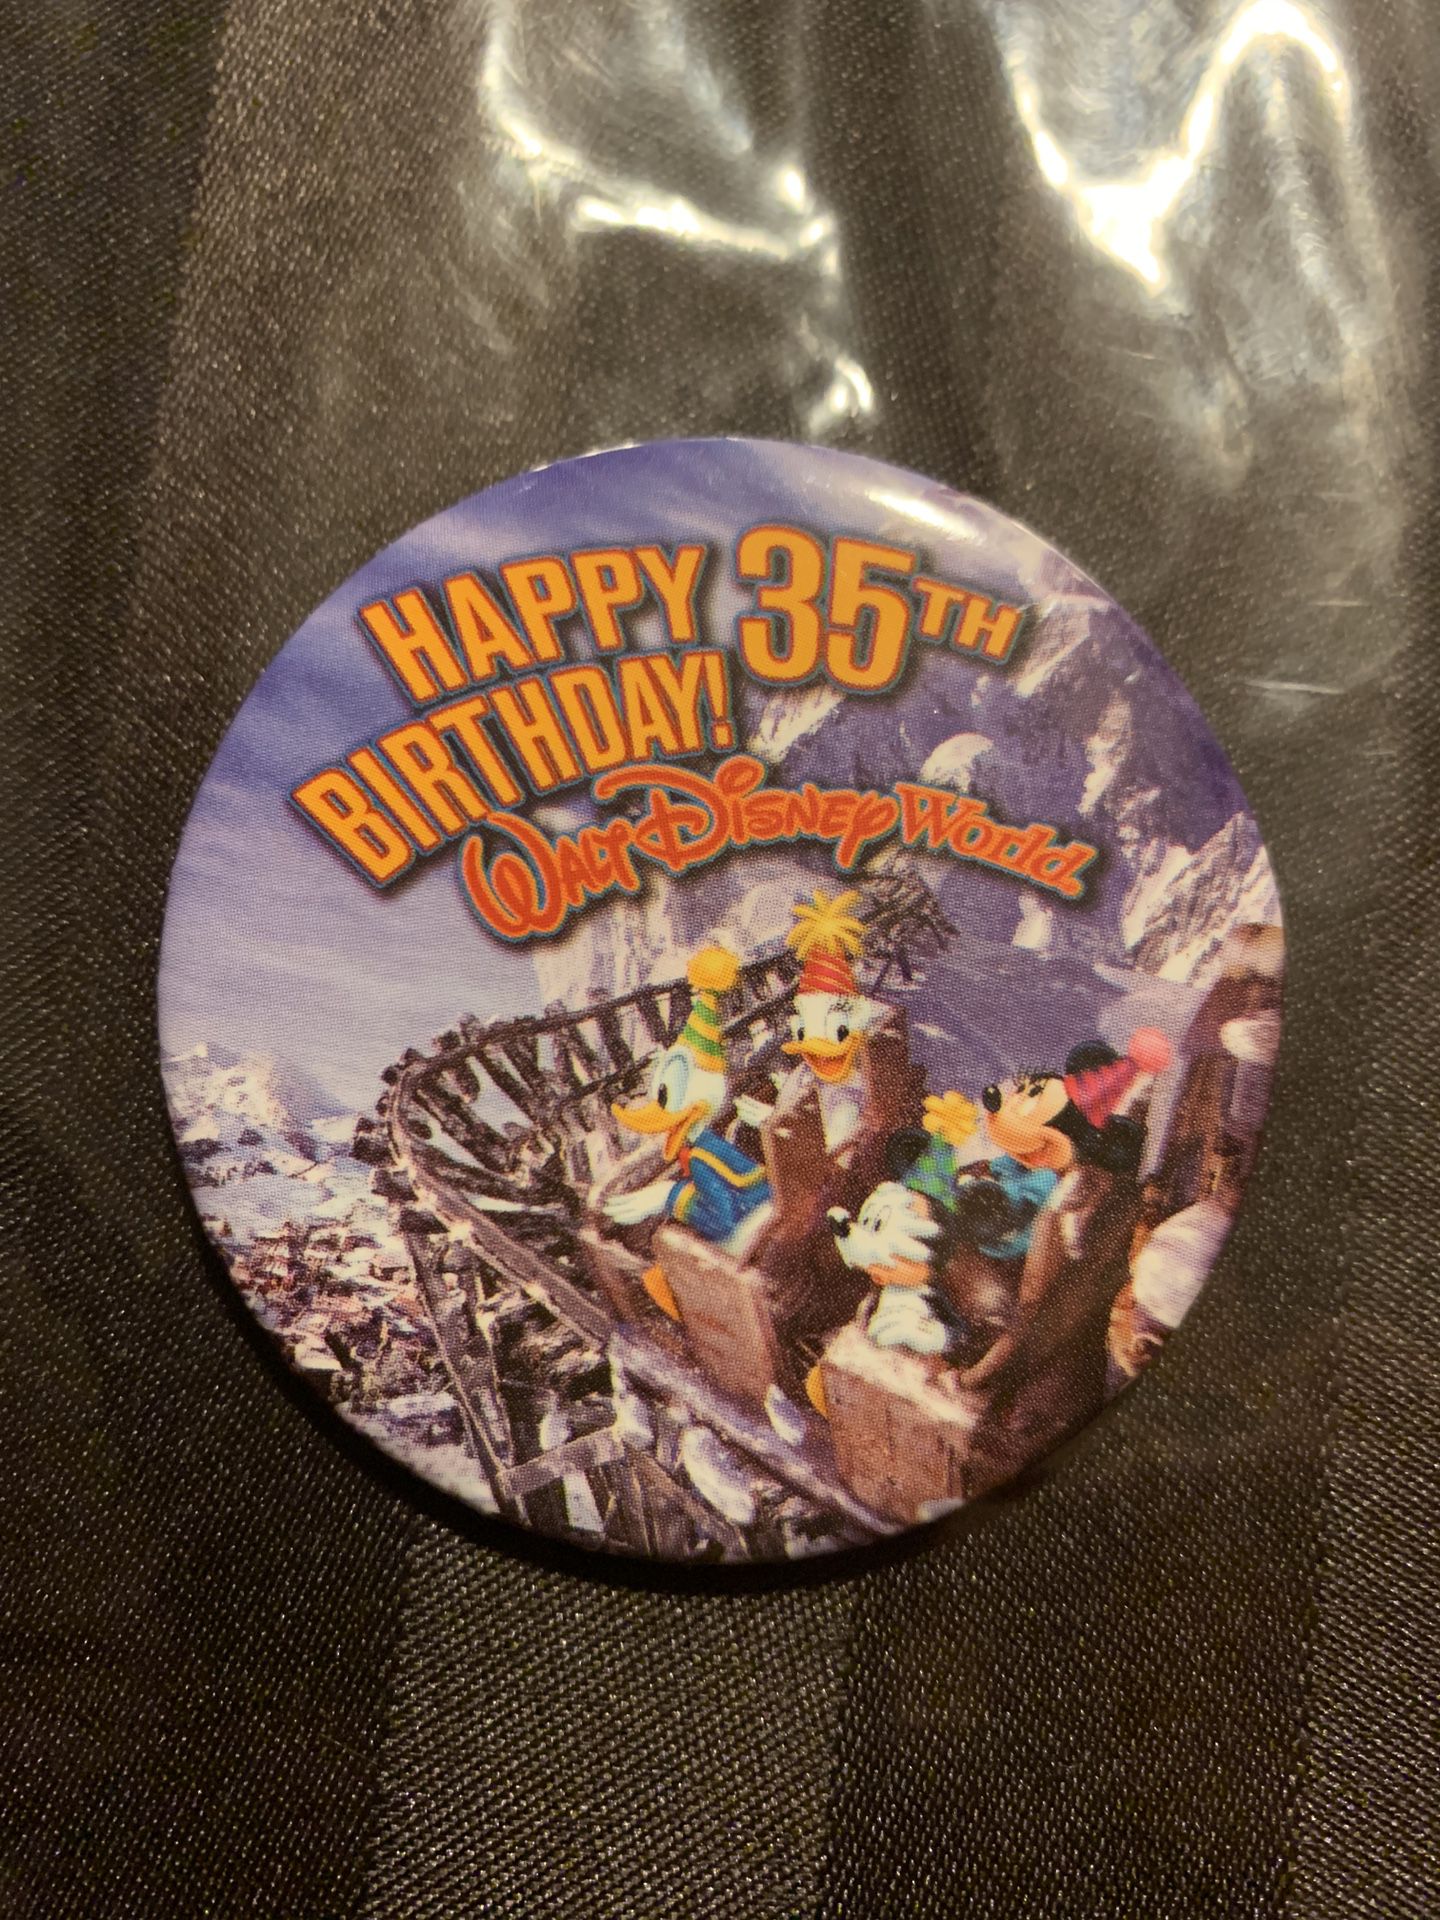 Disney World 2006 (35th Birthday) Cast Member Pin